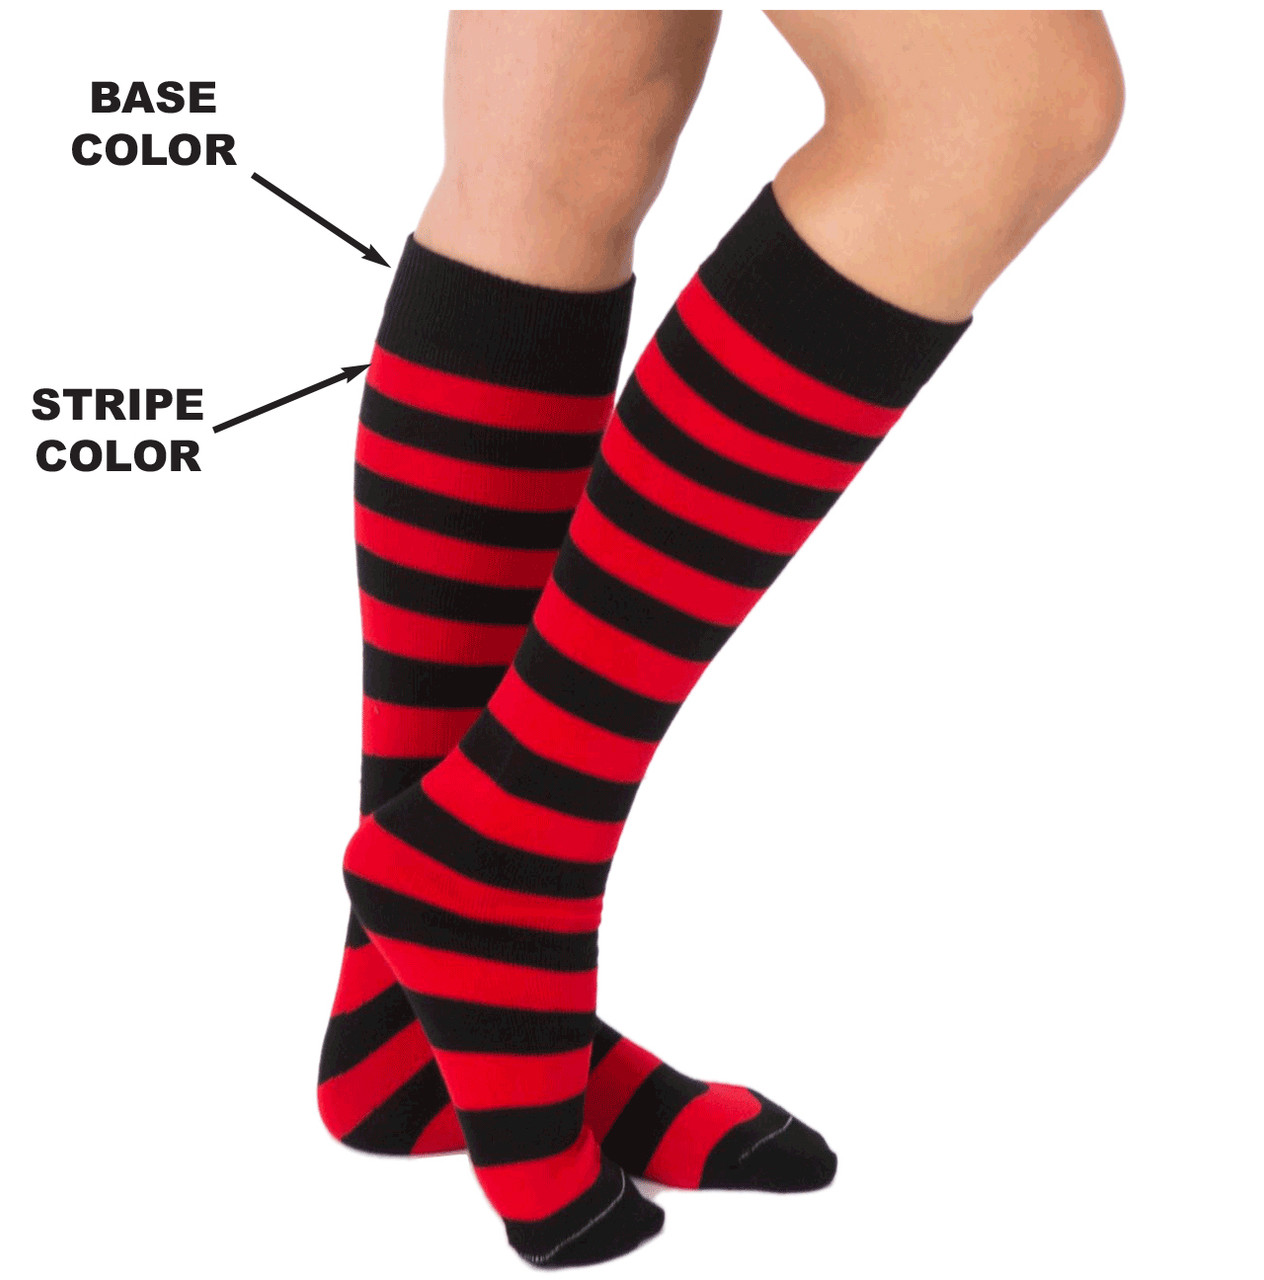 Elevation Custom Socks with Back Stripe